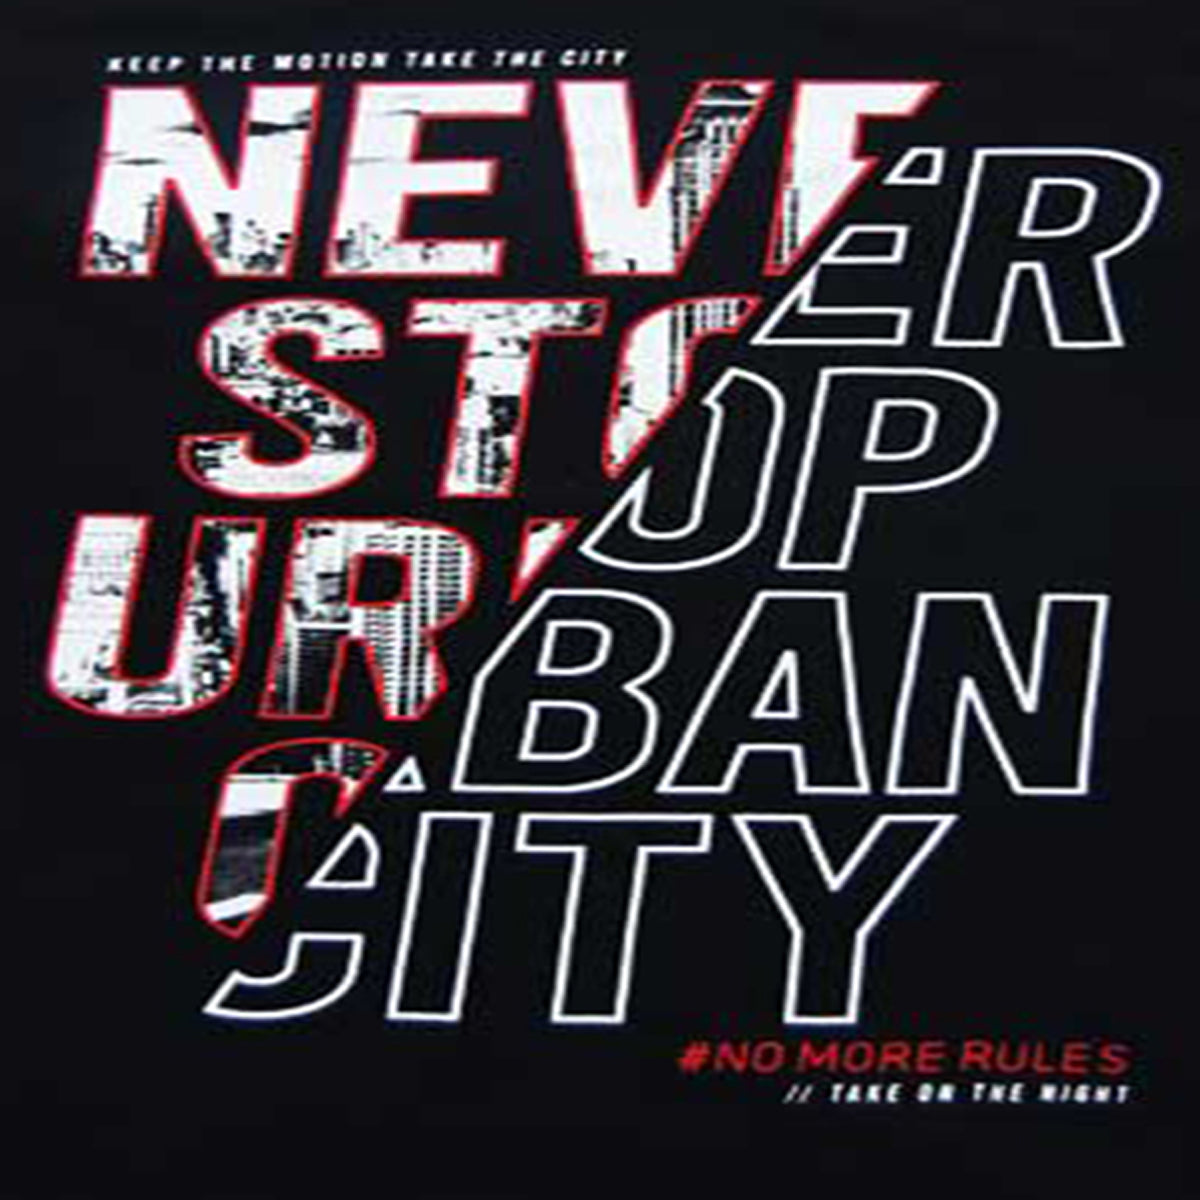 Boys Black Urban City Graphic T-Shirt with Motivational Slogan